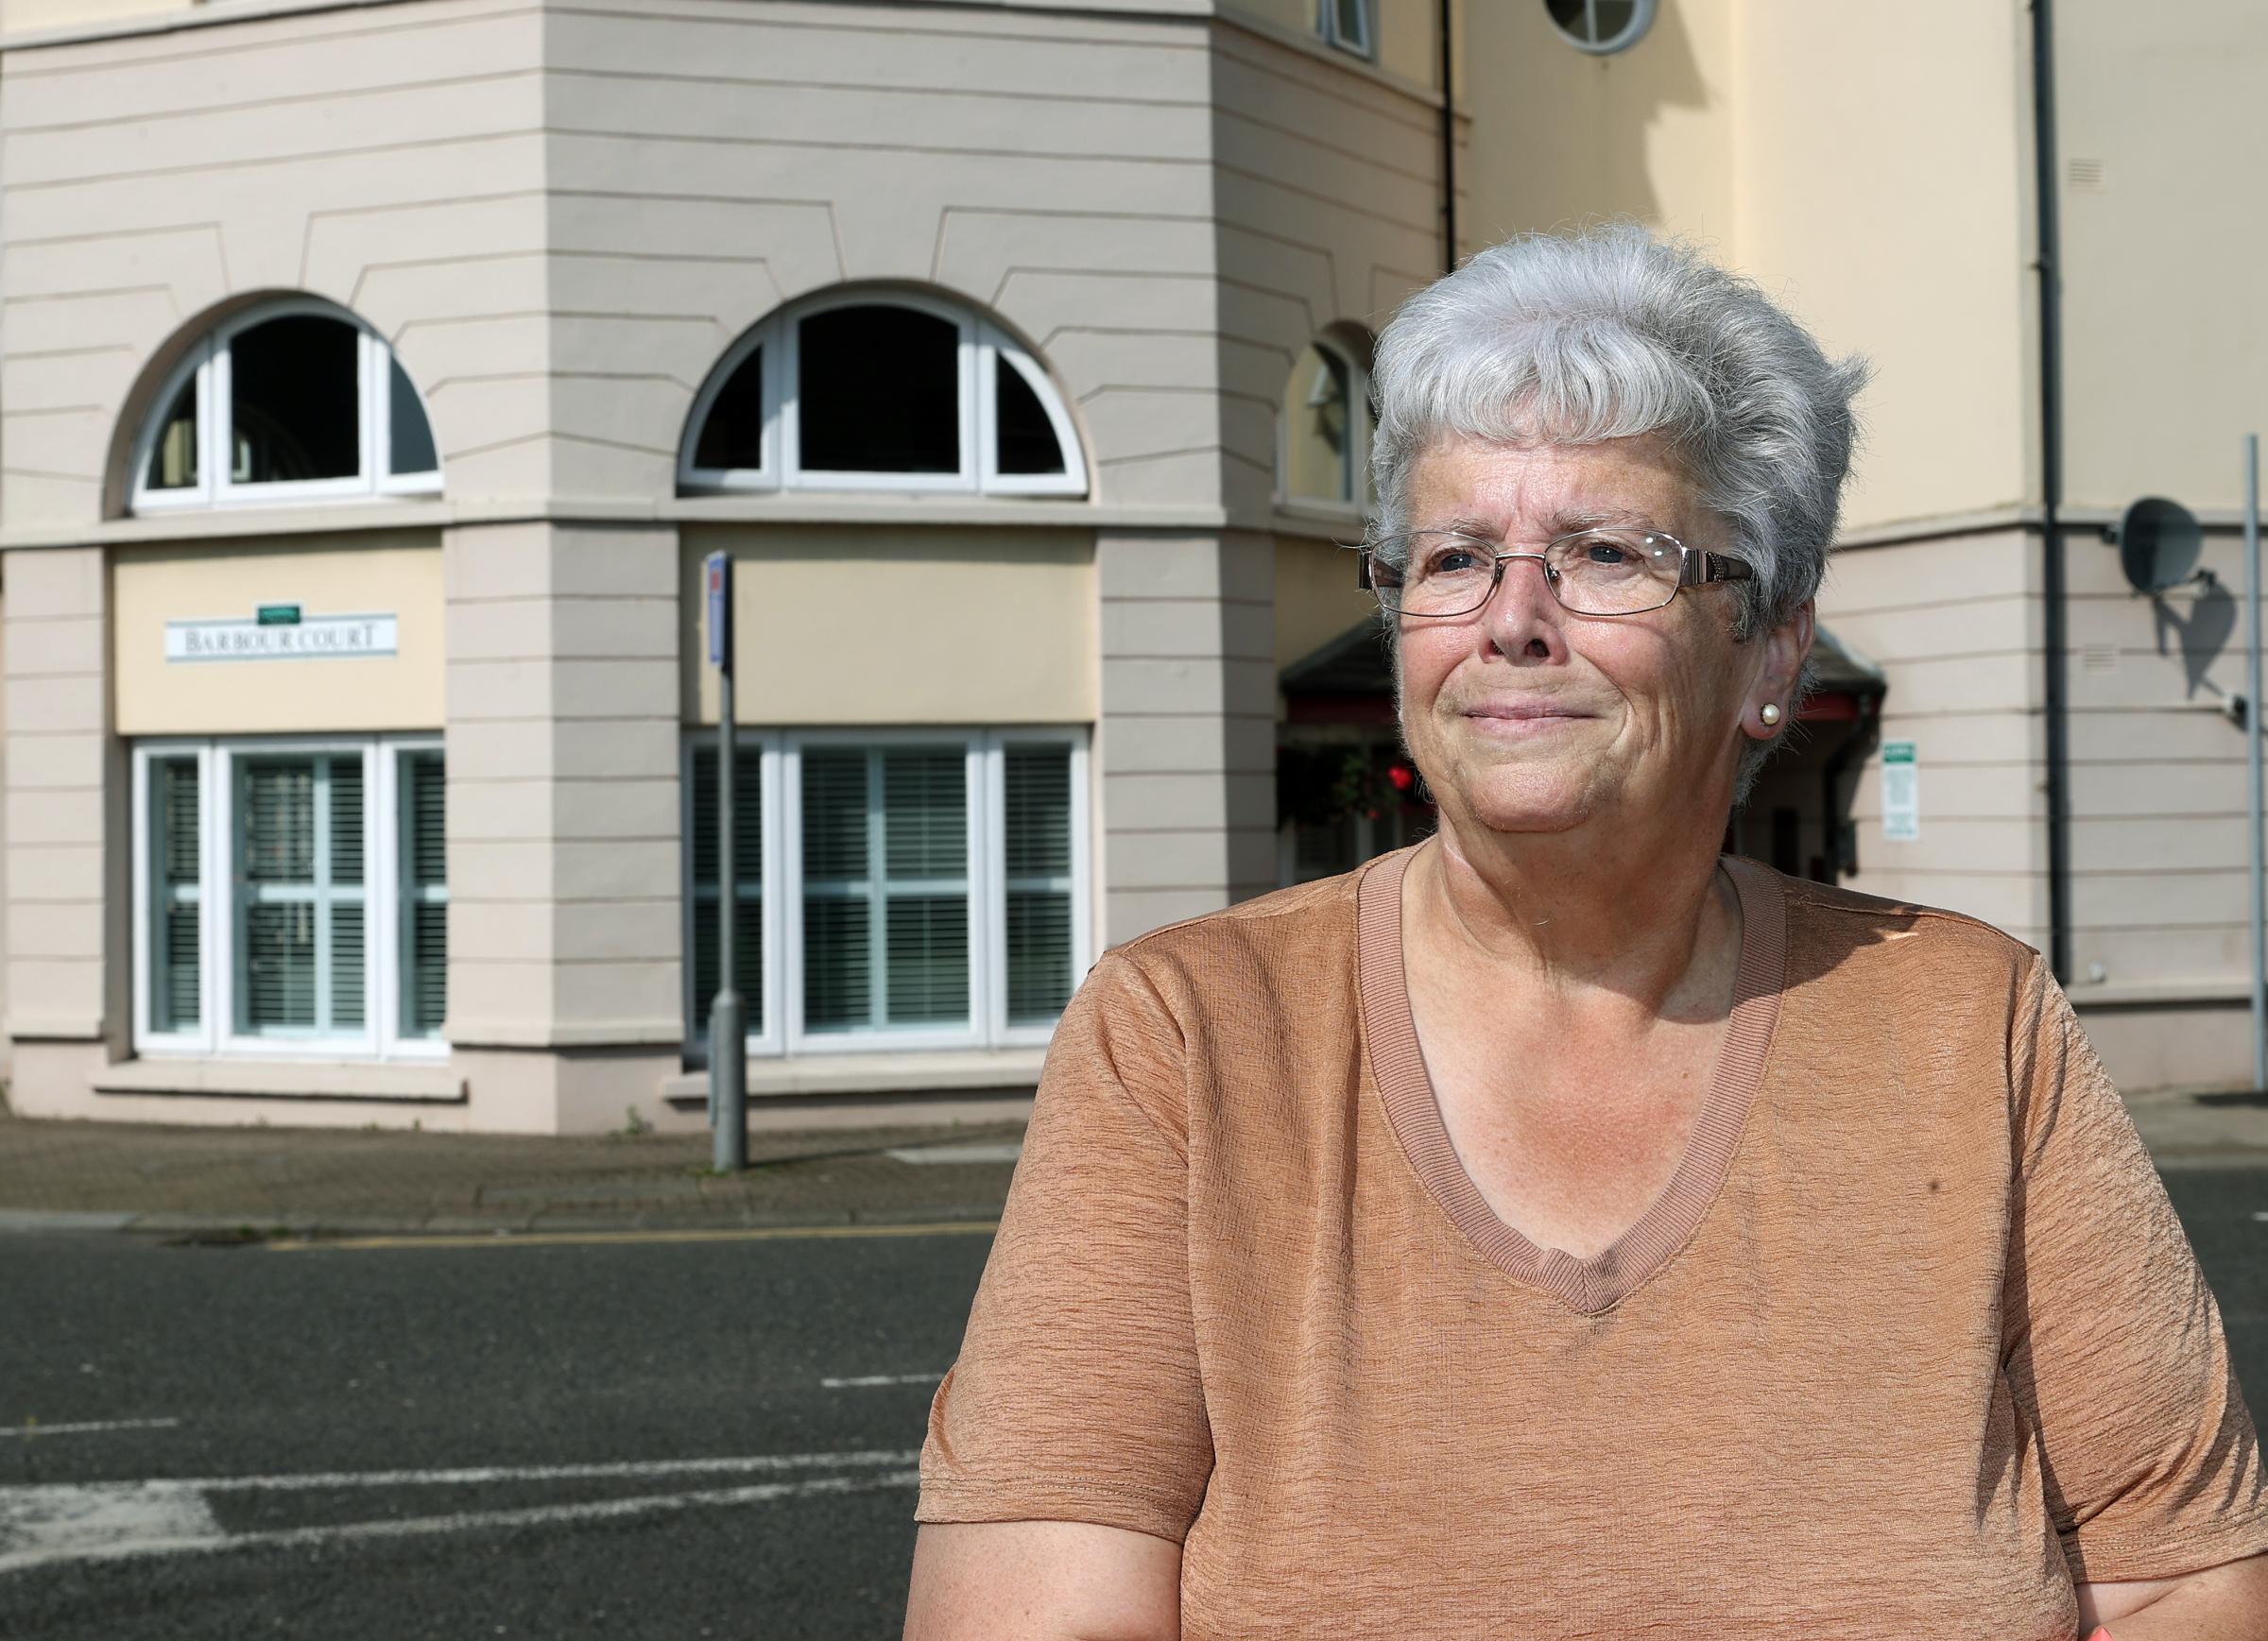 Enniskillen resident slams closure of Post Office as "total disgrace"